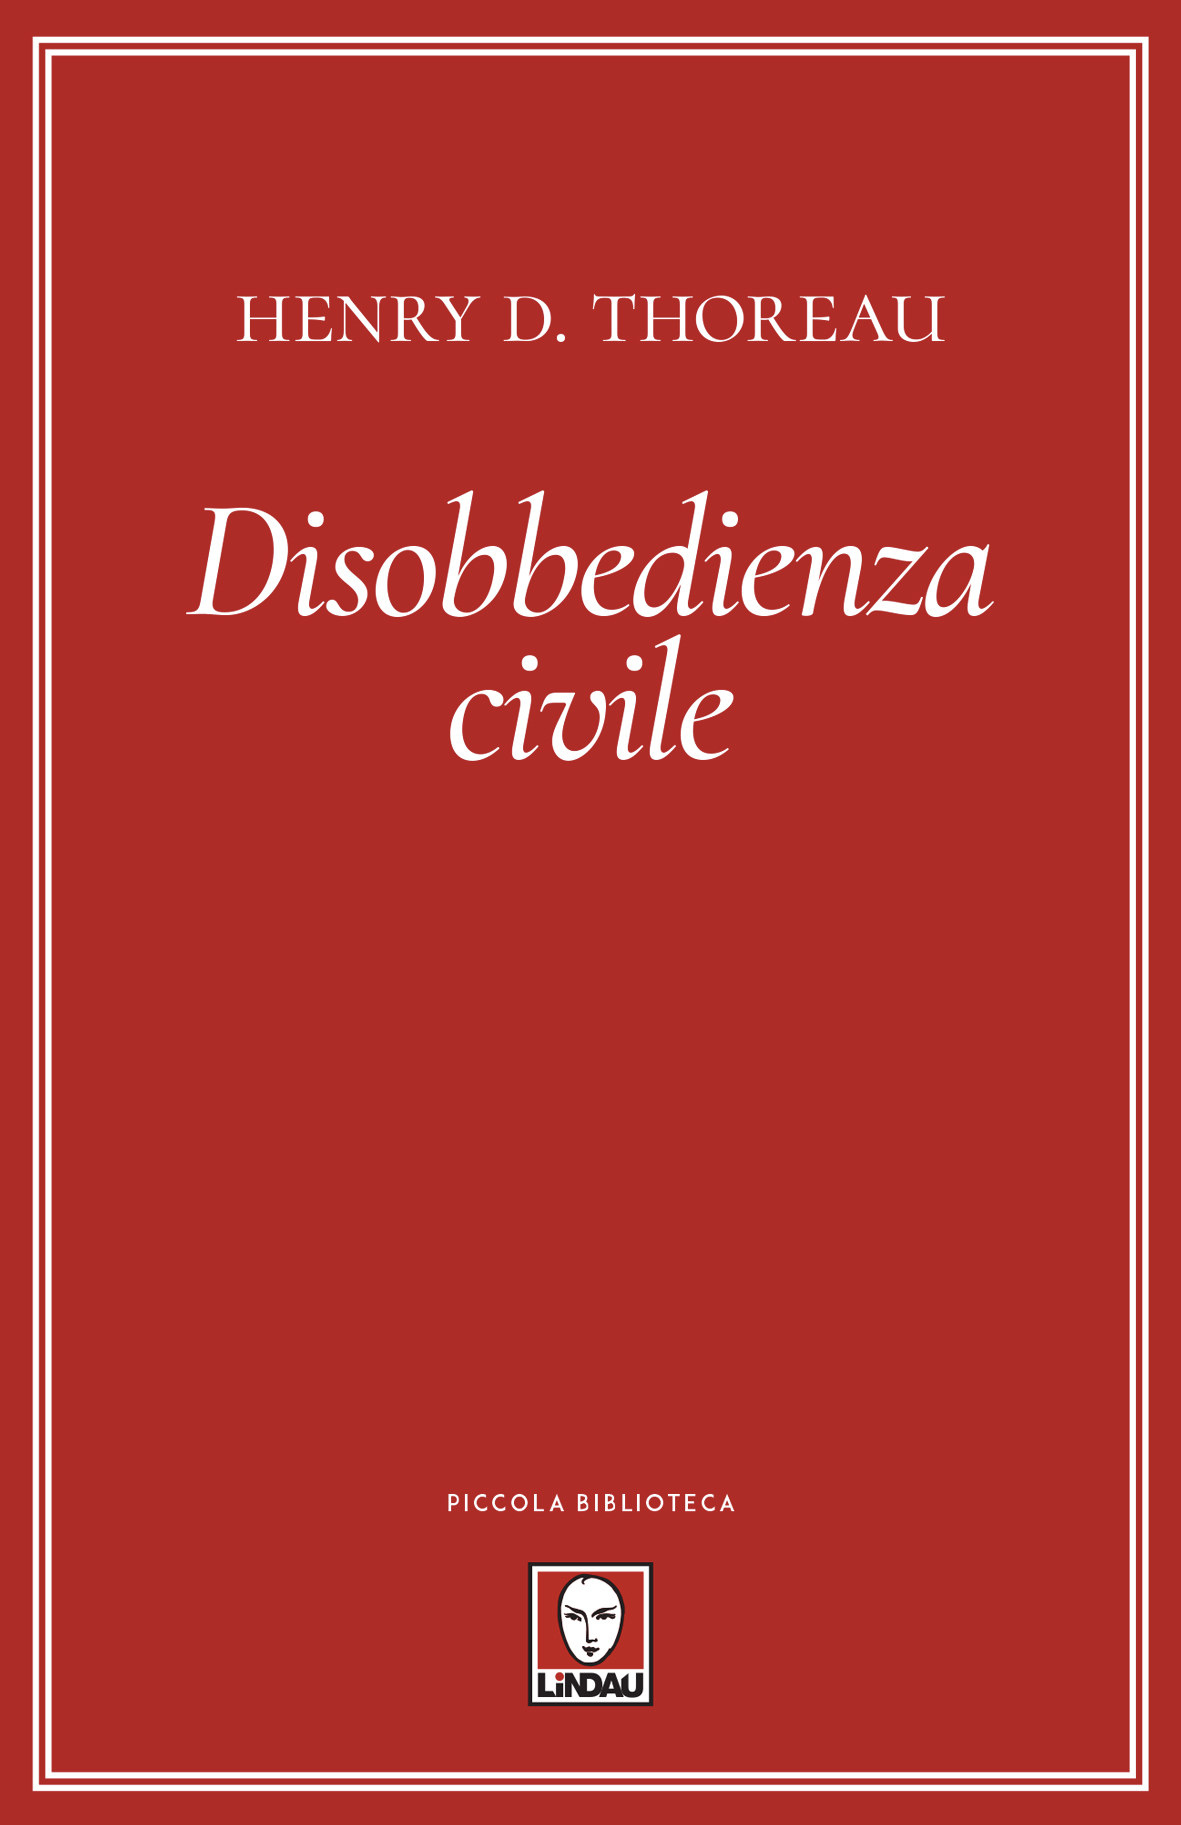 Disobbedienza civile | Henry D. Thoreau | 9788833533476 | Edizioni Lindau